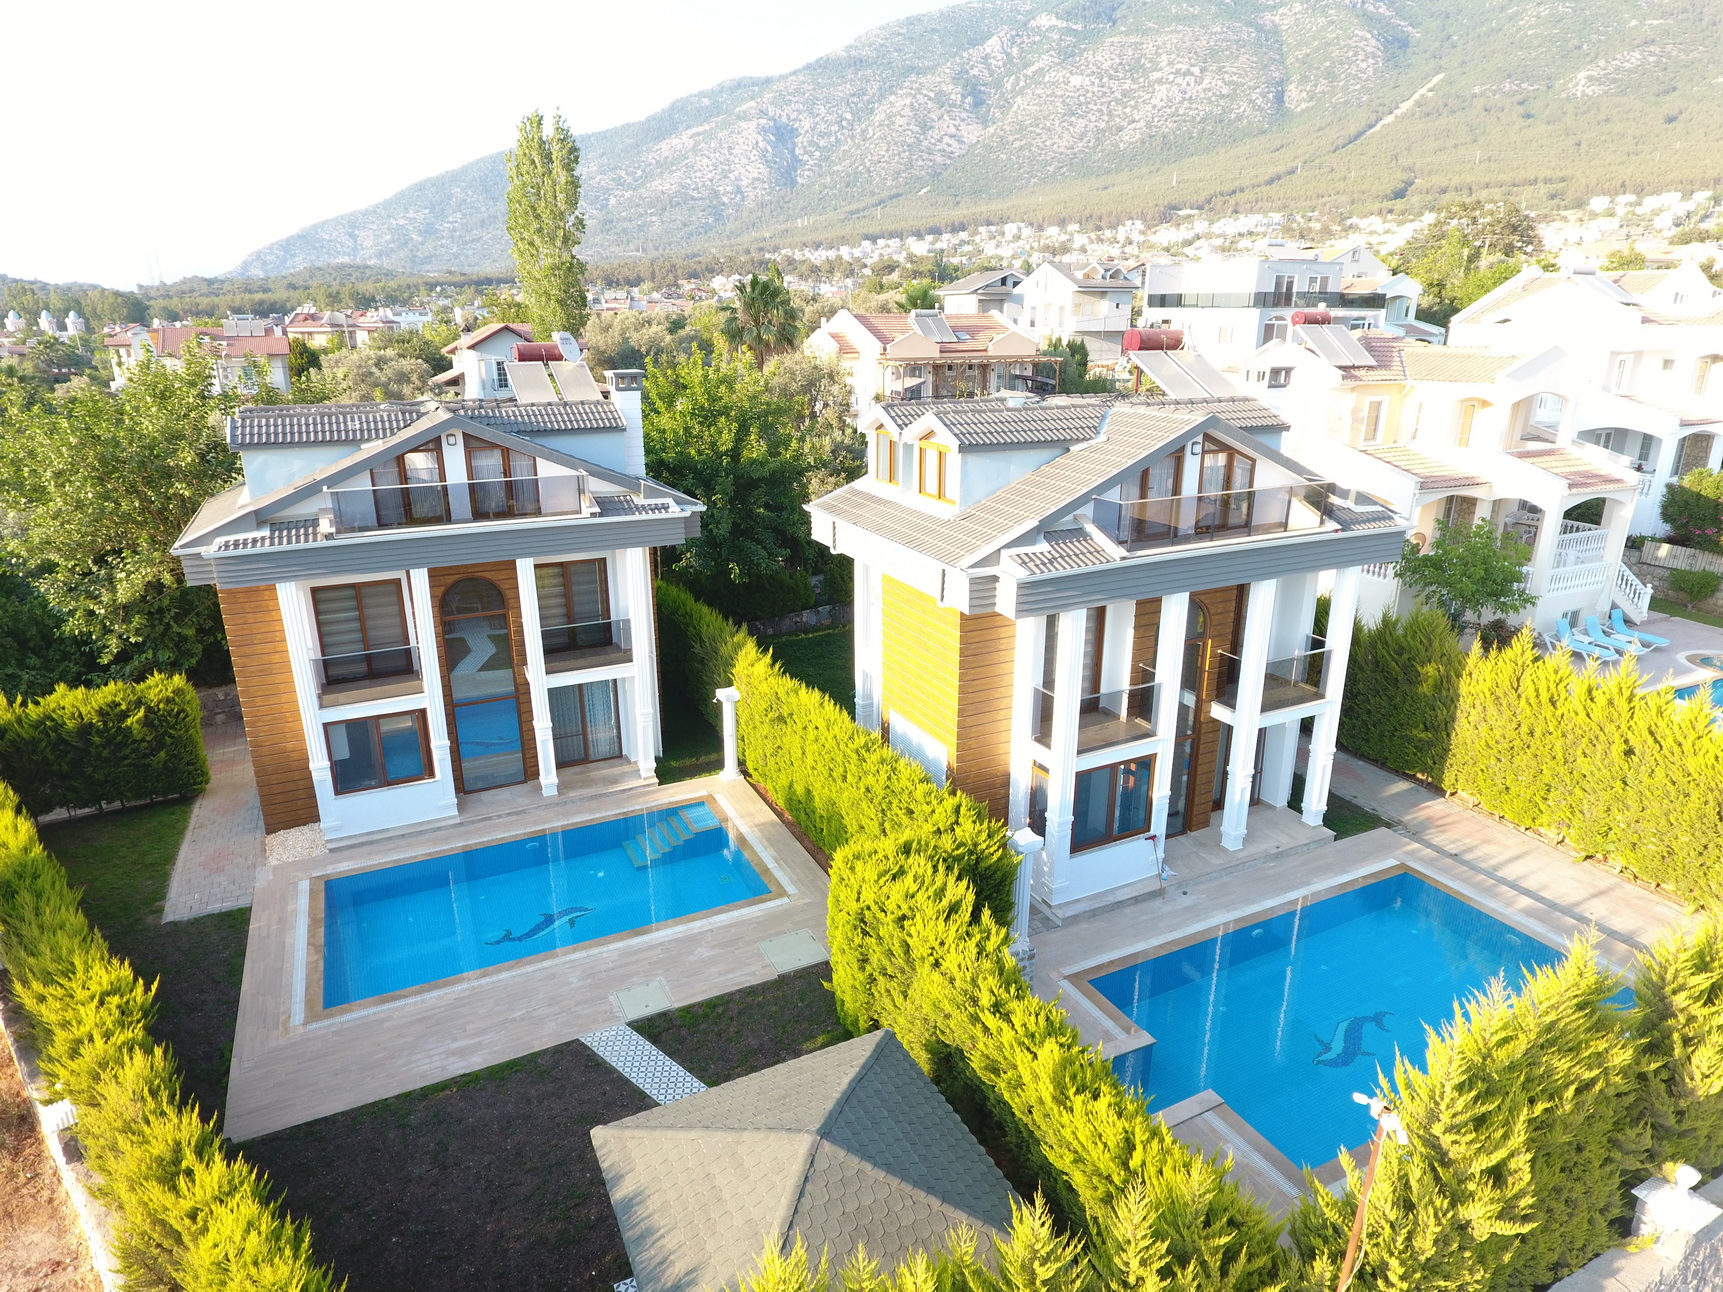 4 Bedroom Luxury Triplex Villas with Swimming Pool